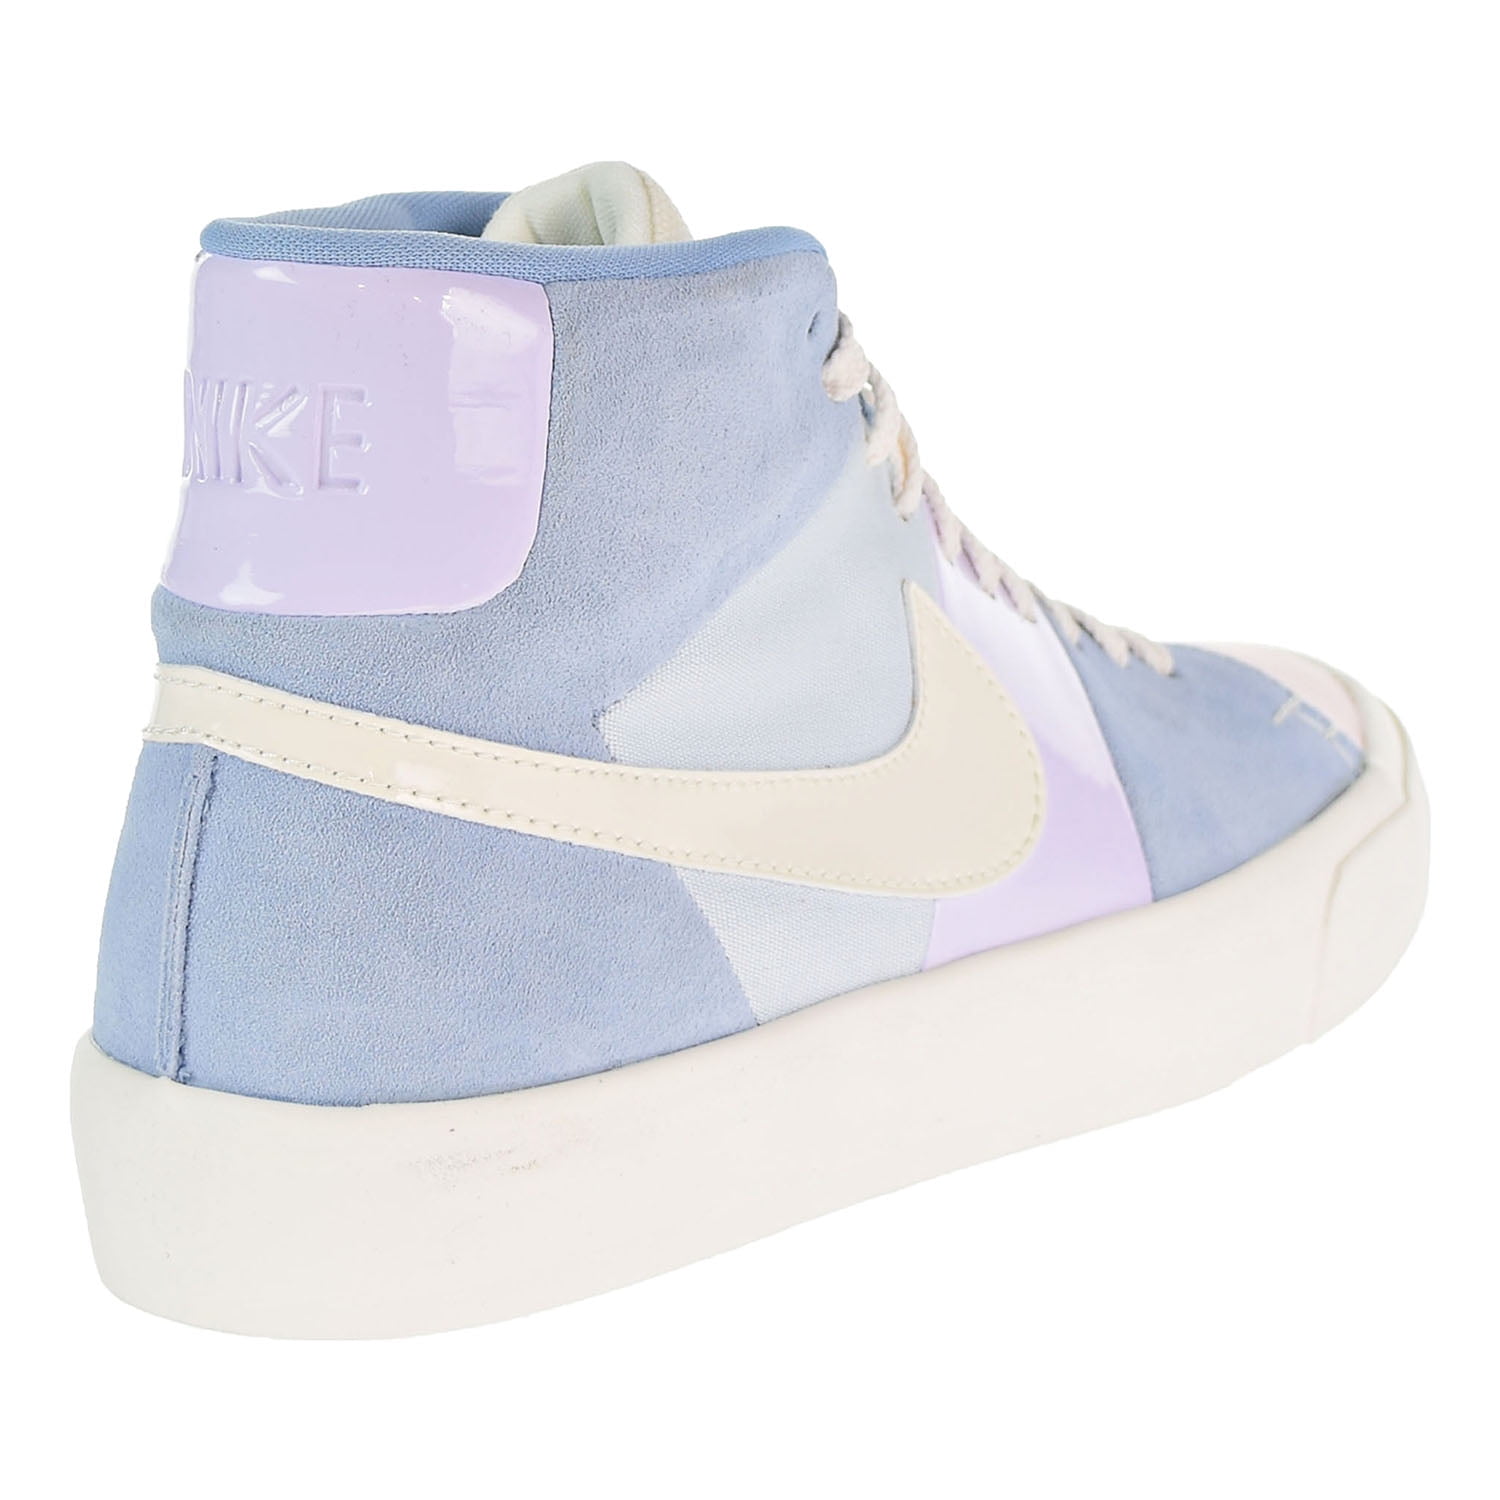 Nike Blazer Royal Easter QS Men's Shoes Pink/Blue ao2368-600